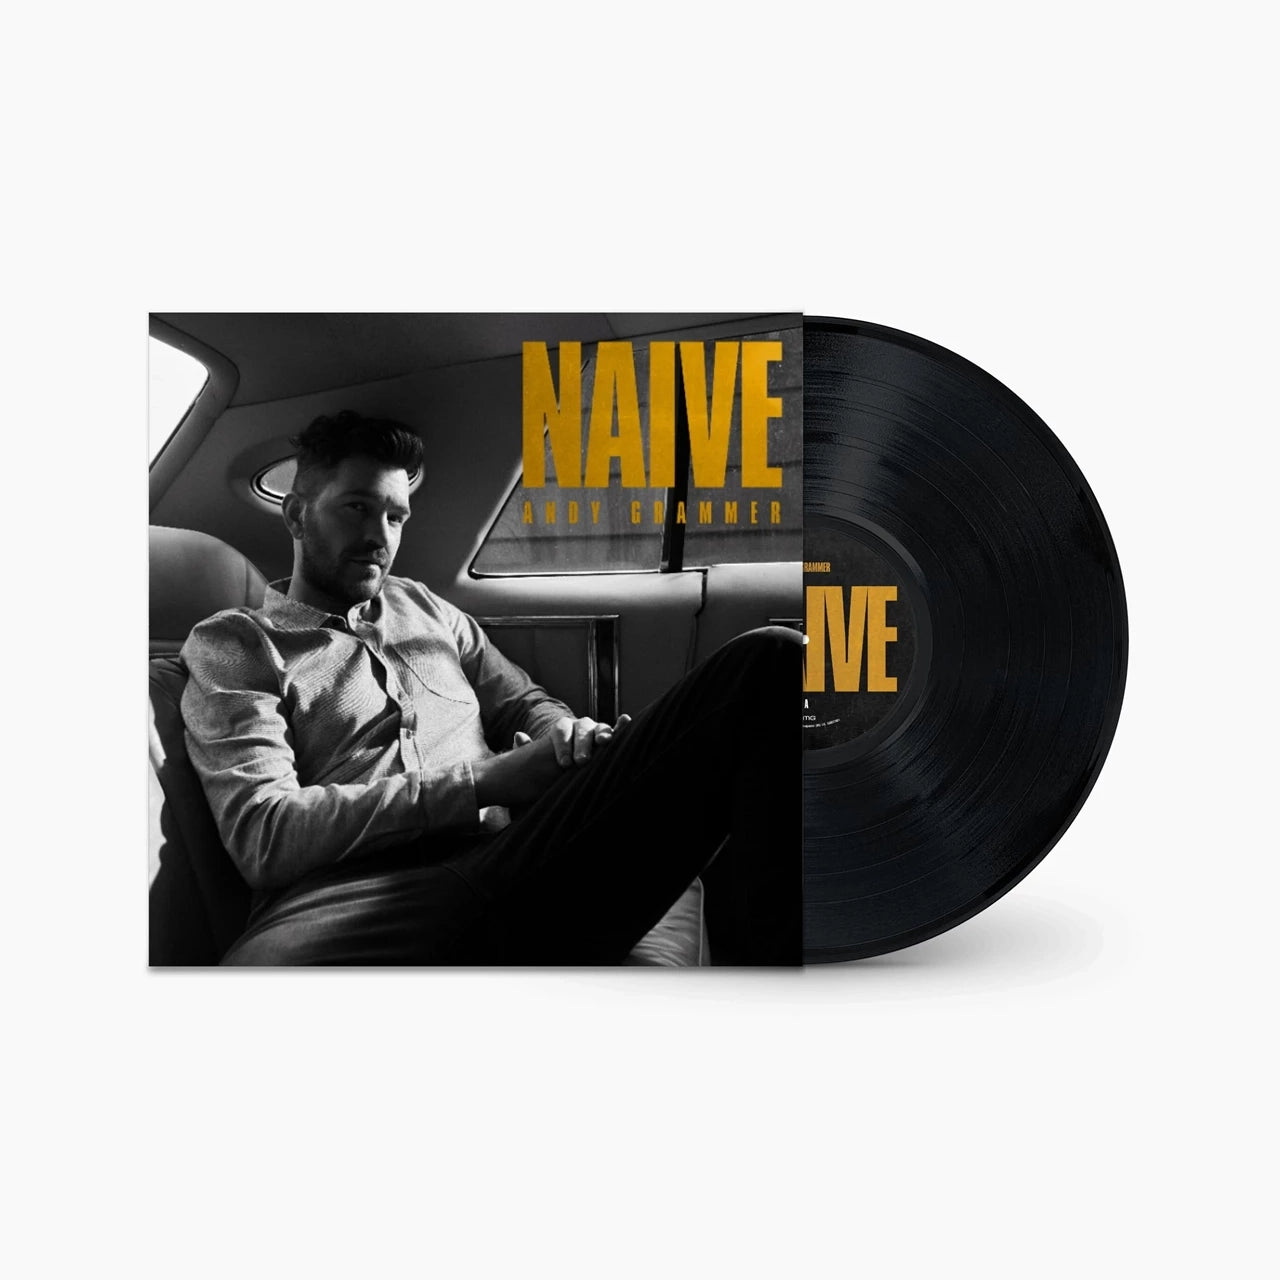 Andy Grammer - Naïve: Vinyl LP